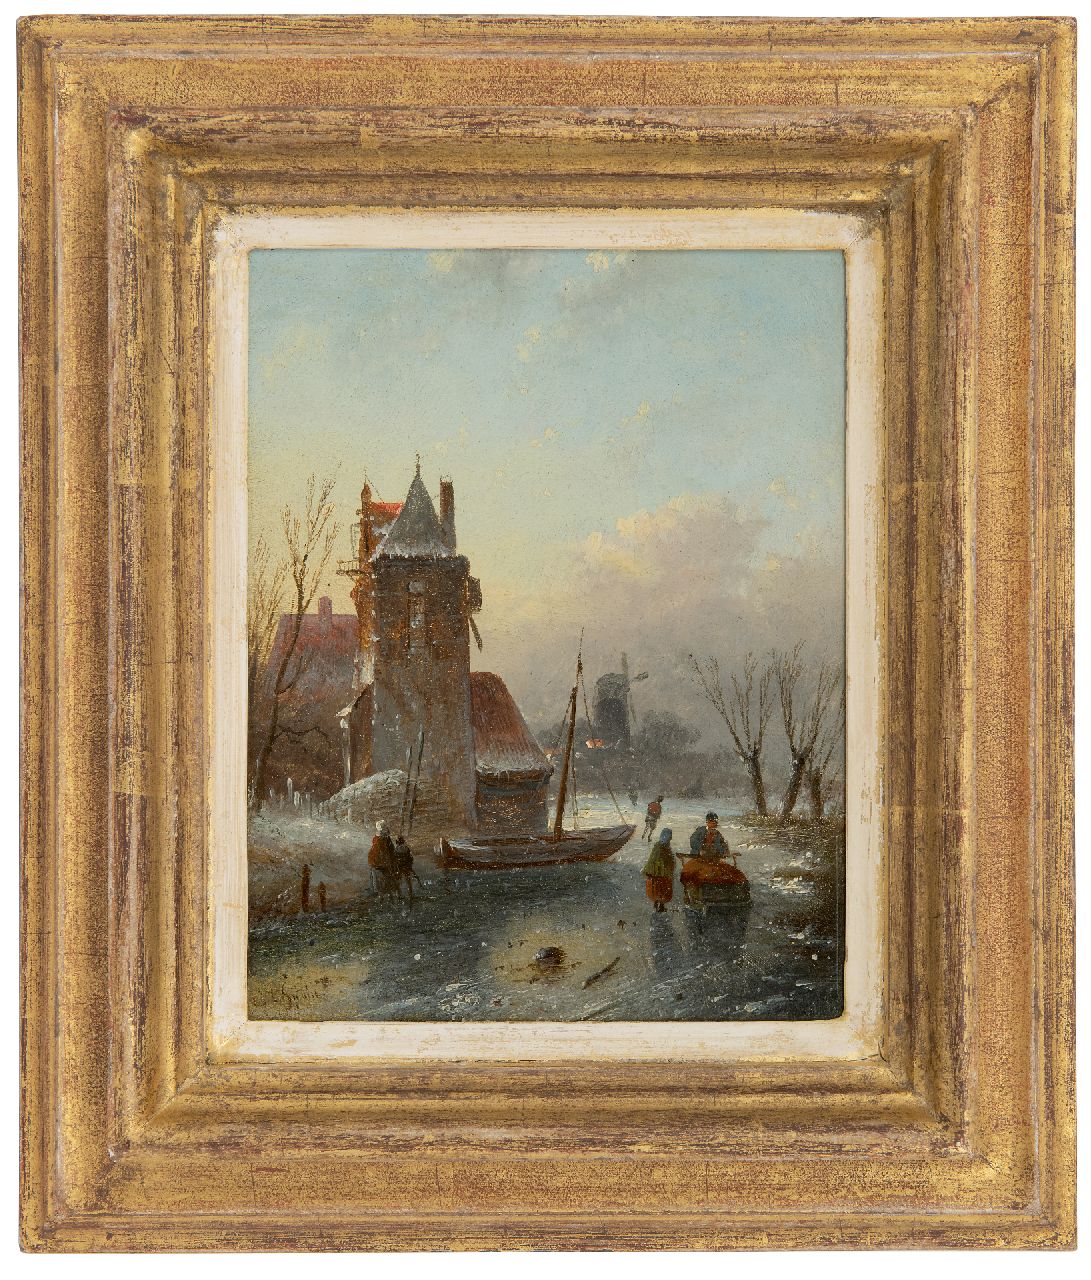 Spohler J.J.C.  | Jacob Jan Coenraad Spohler, Ice scene with skaters, oil on panel 18.9 x 14.6 cm, signed l.l.